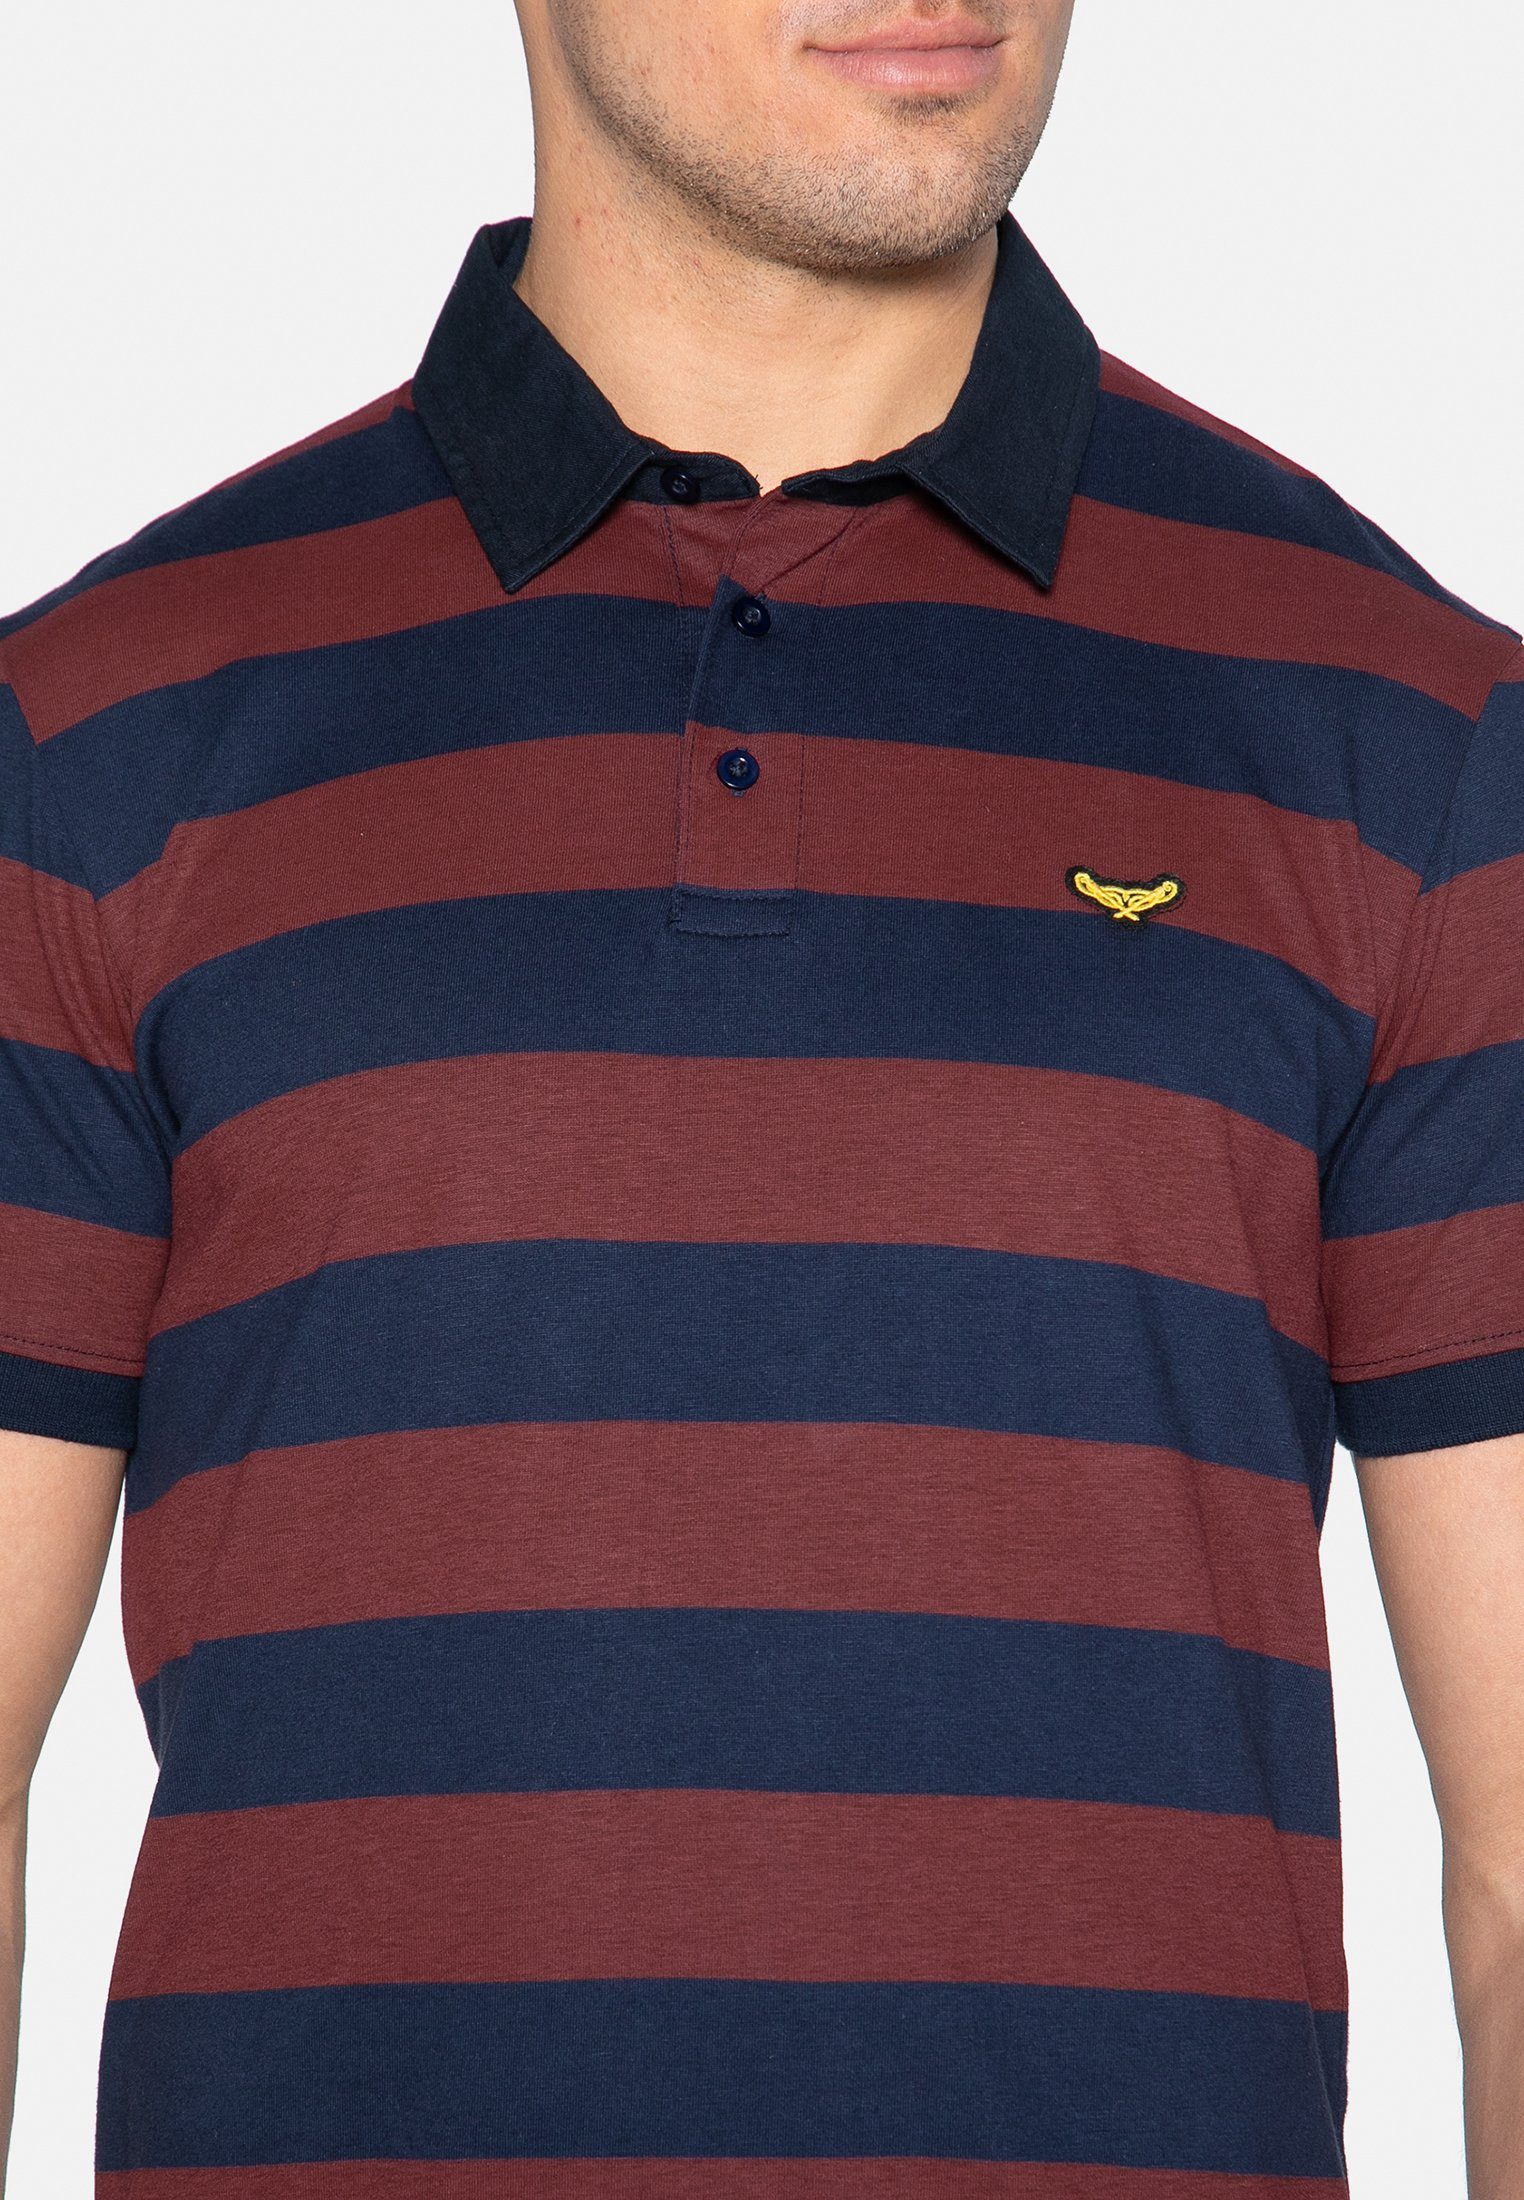 Navy Rugby Poloshirt Stripe Threadbare